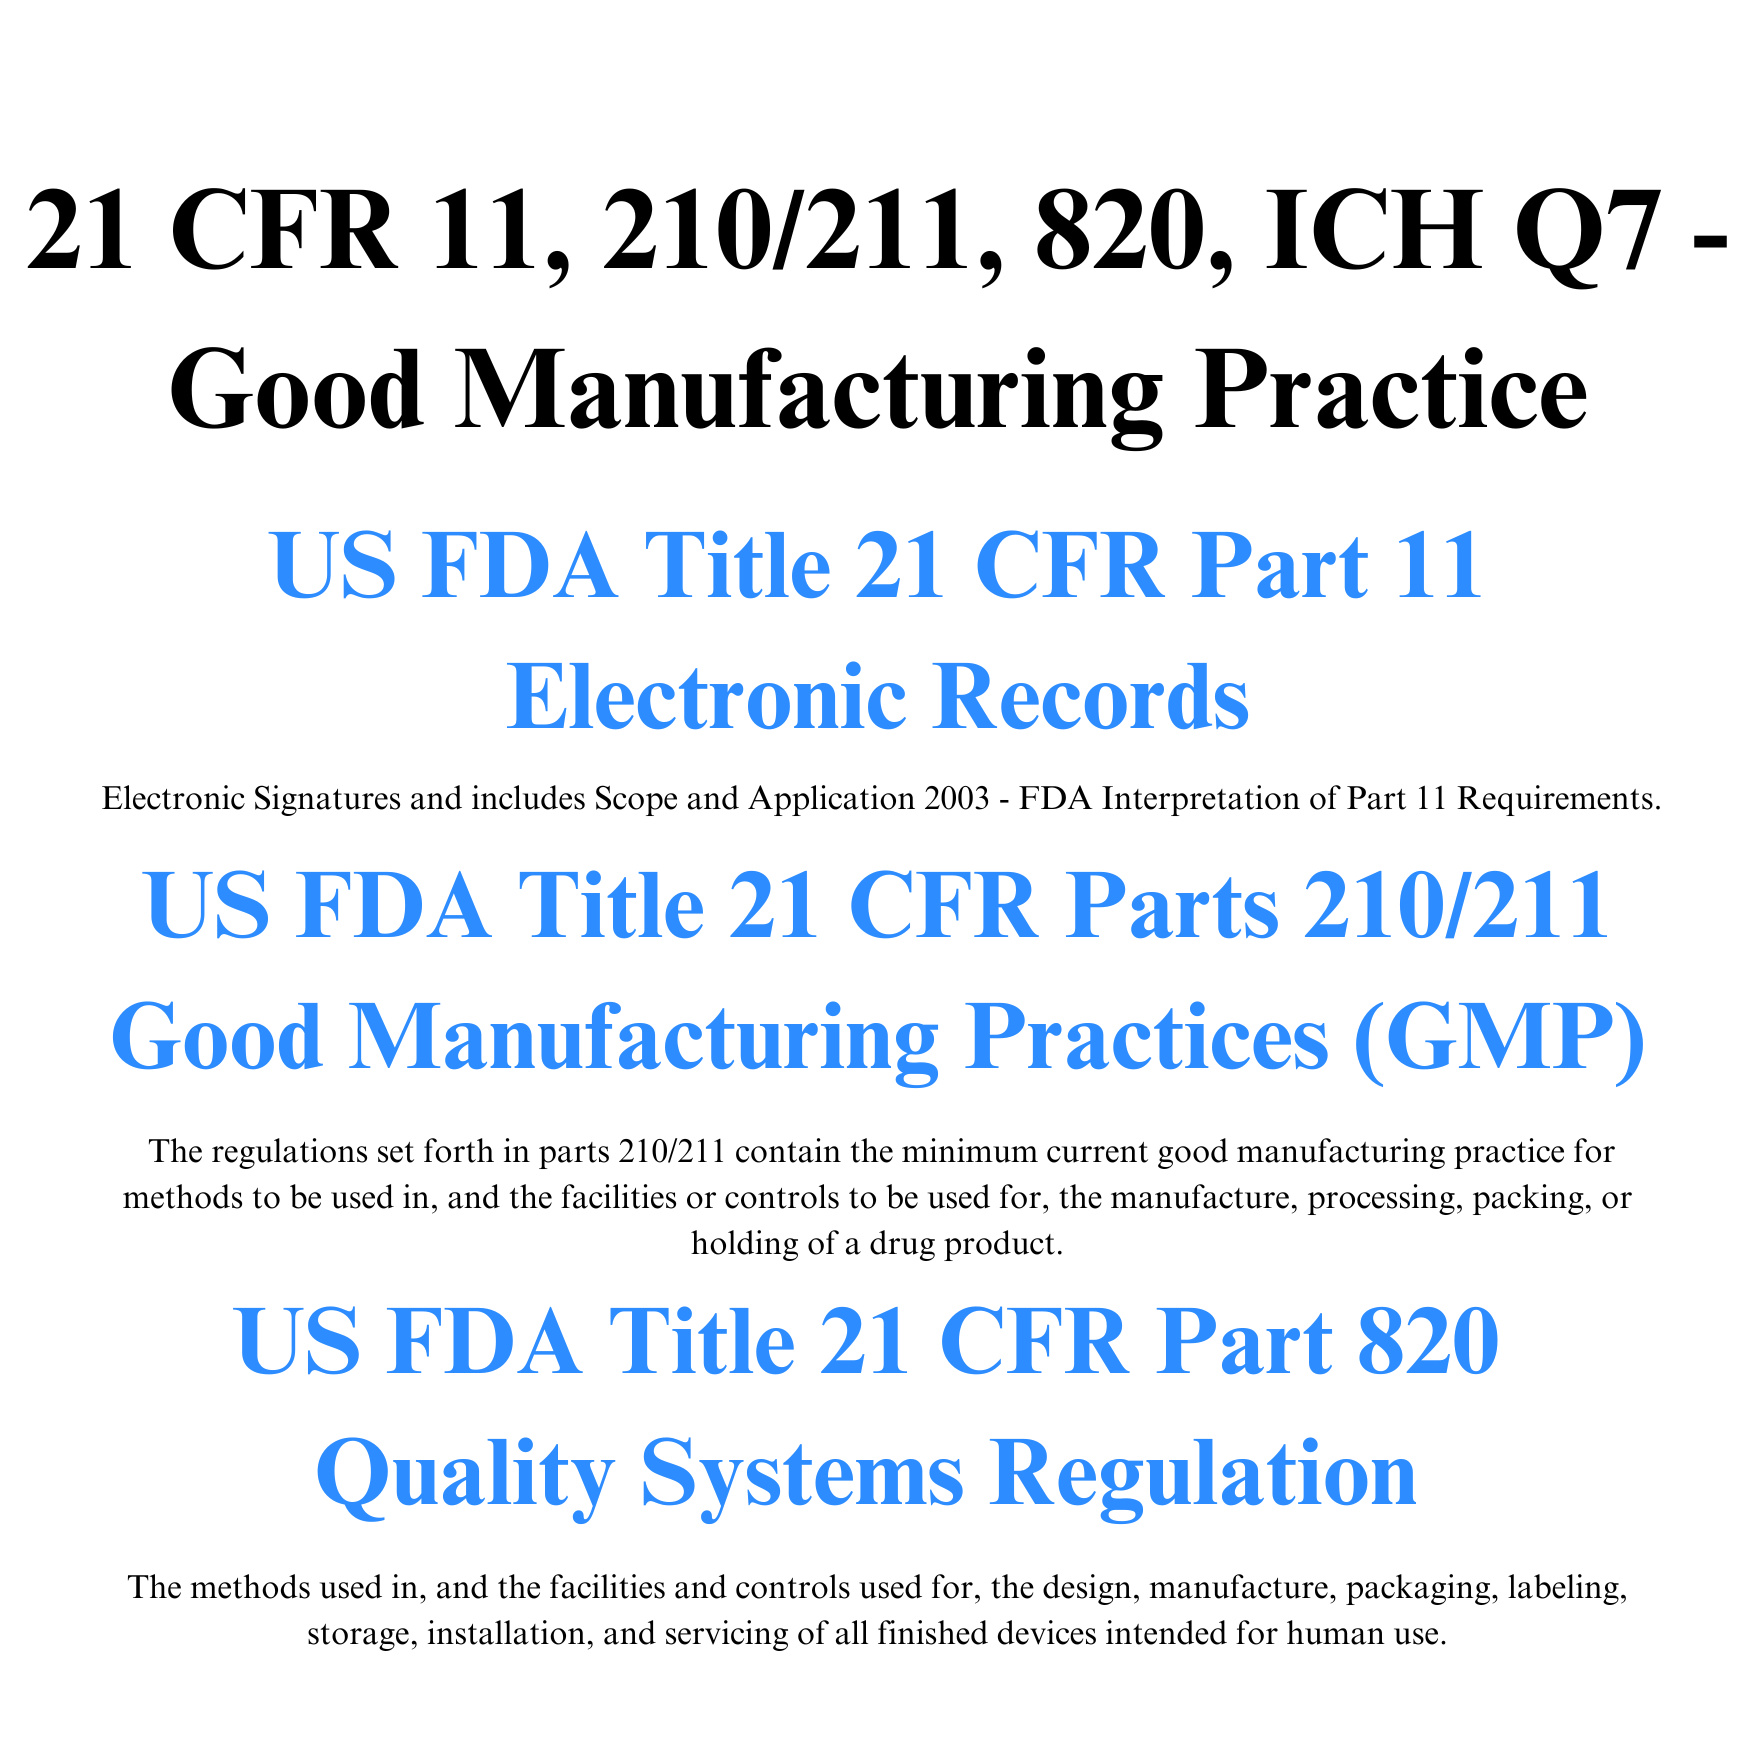 Manufacturing Site - Standard Operating Procedures (SOPs)